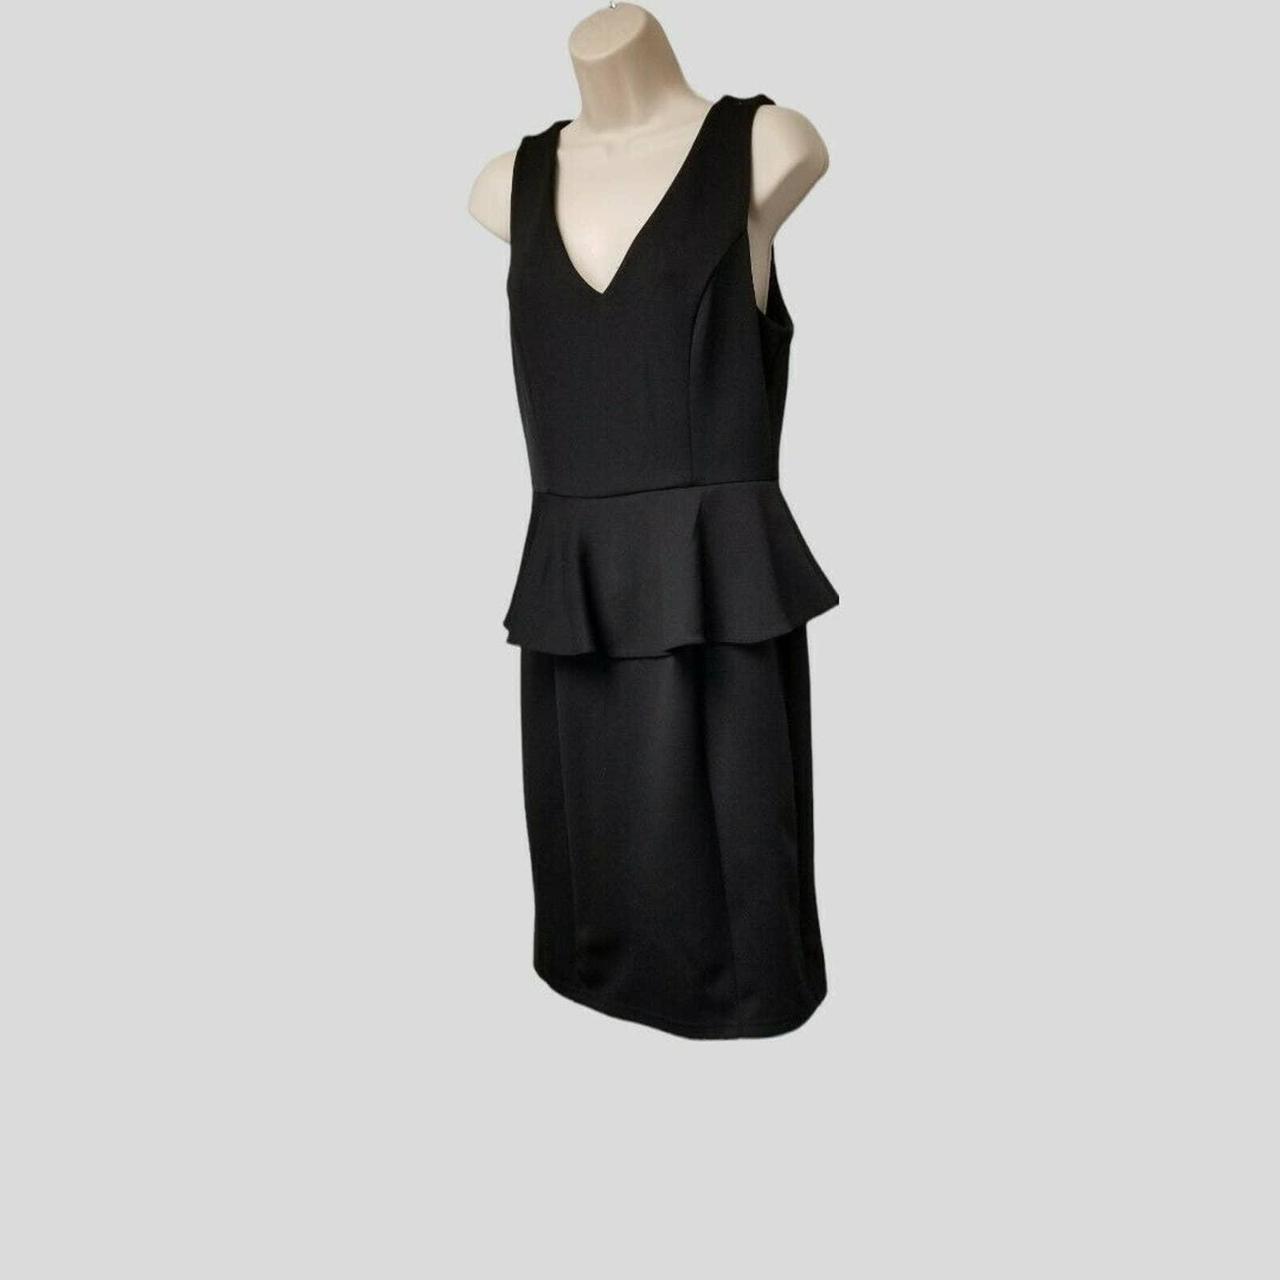 Nicole Miller Women's Black Dress (2)